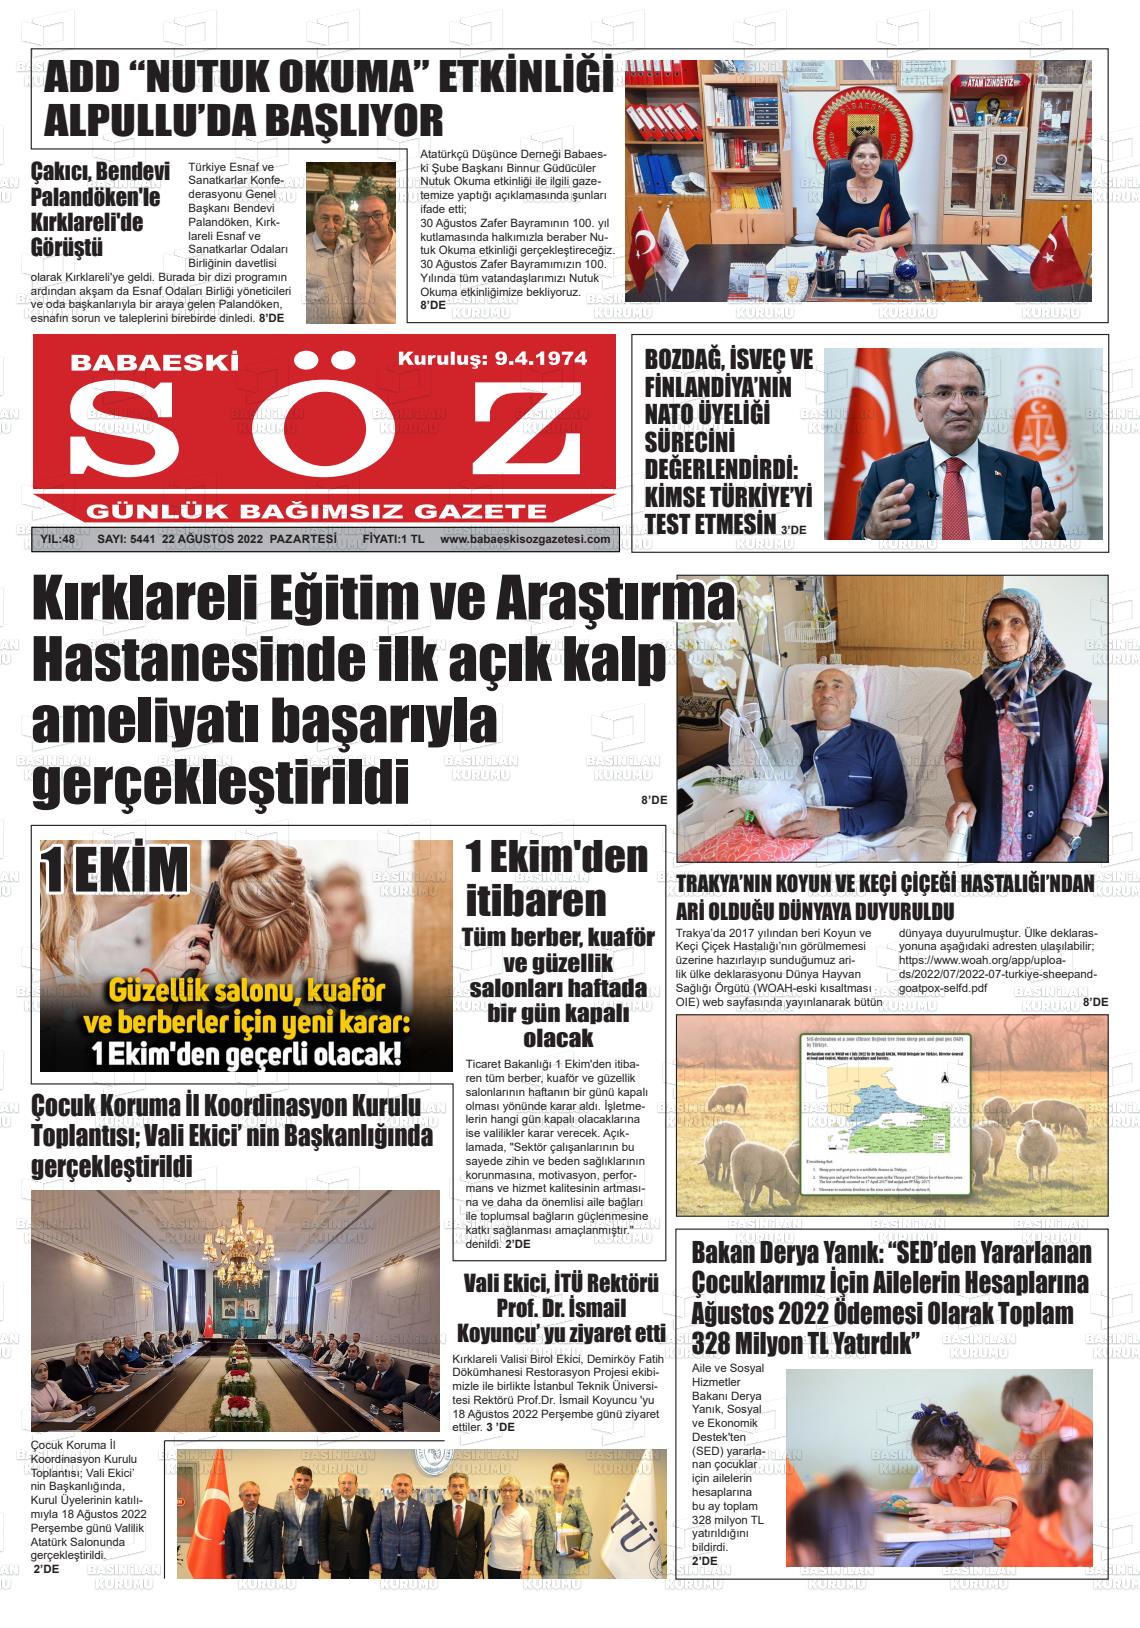 23 Ağustos 2022 Babaeski Söz Gazete Manşeti